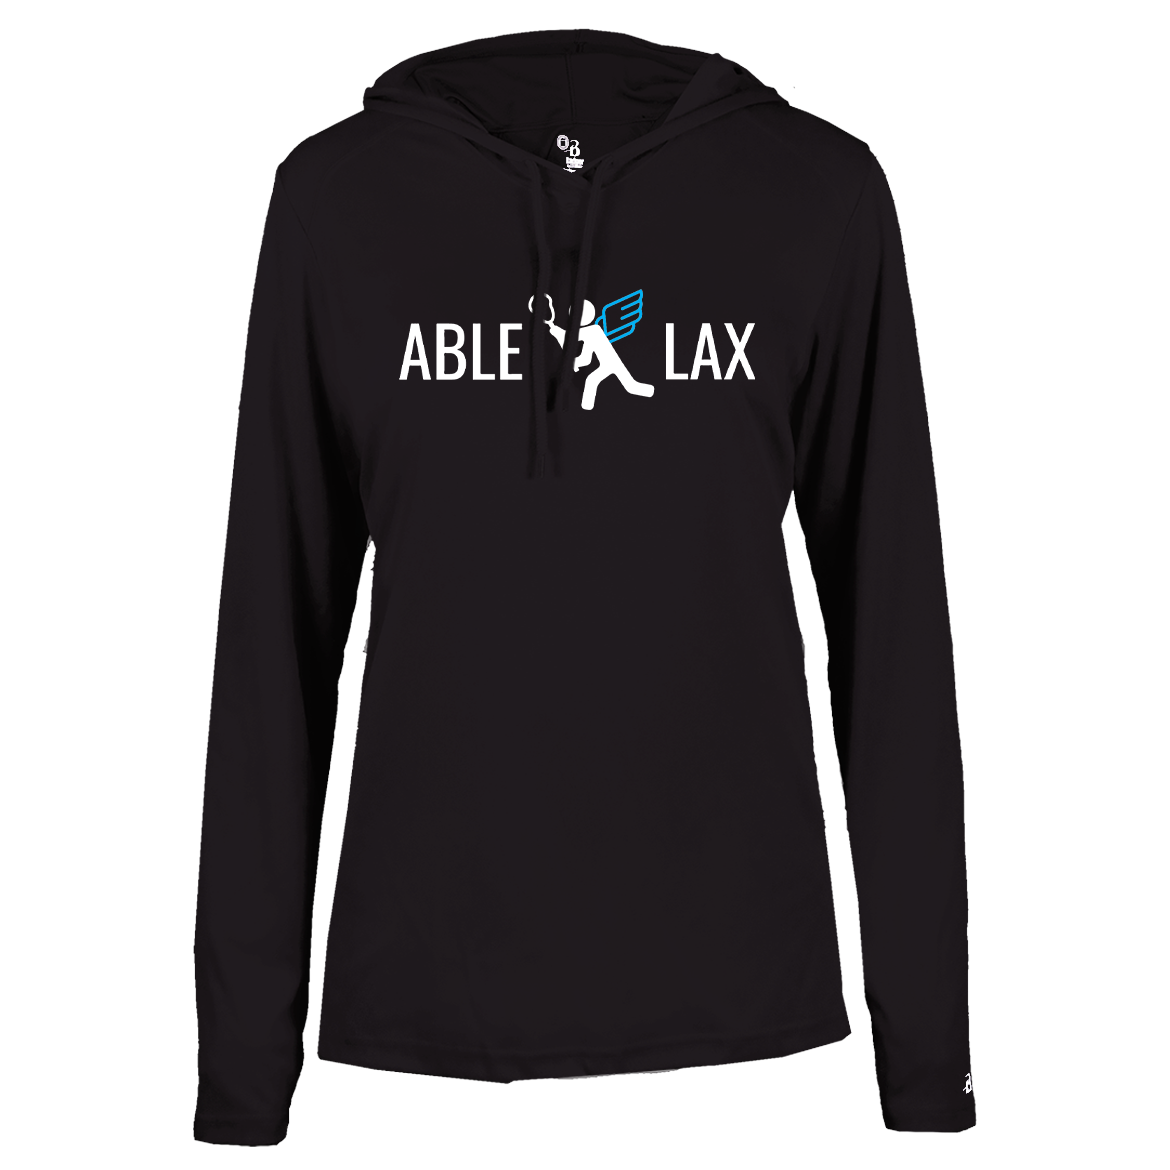 ABLE Lacrosse Women's Hooded Long Sleeve